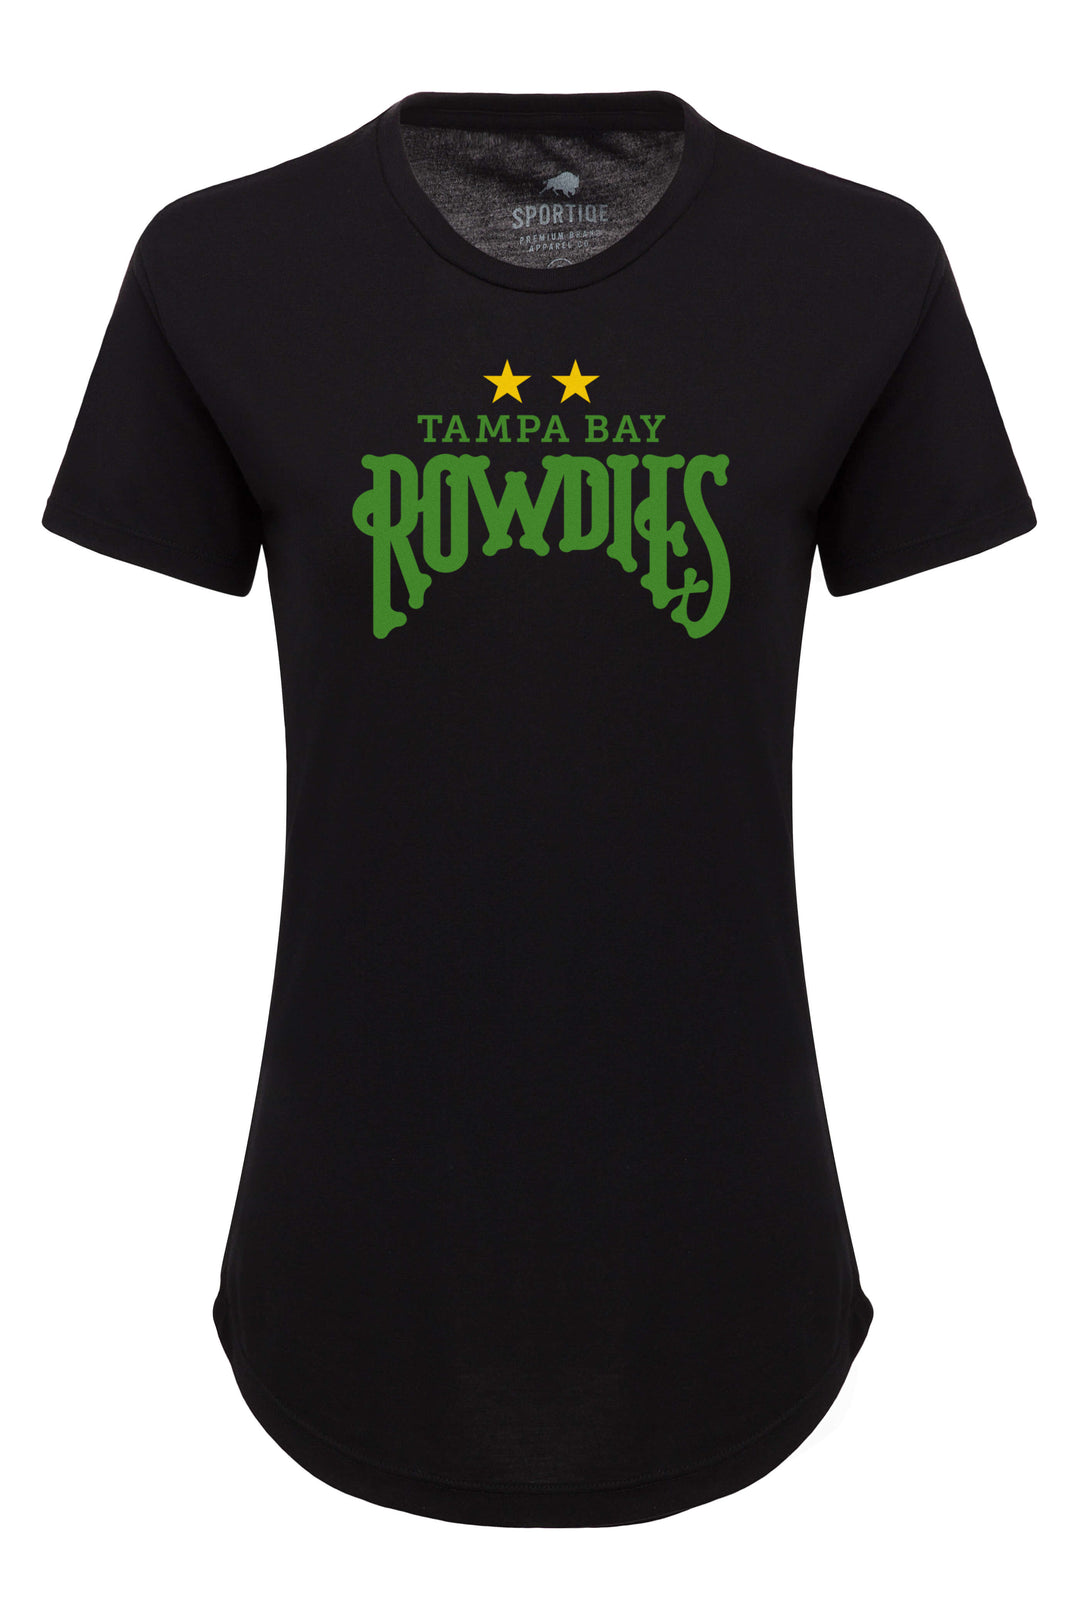 Rowdies Women's Sportiqe Black Green 2 Star T-Shirt